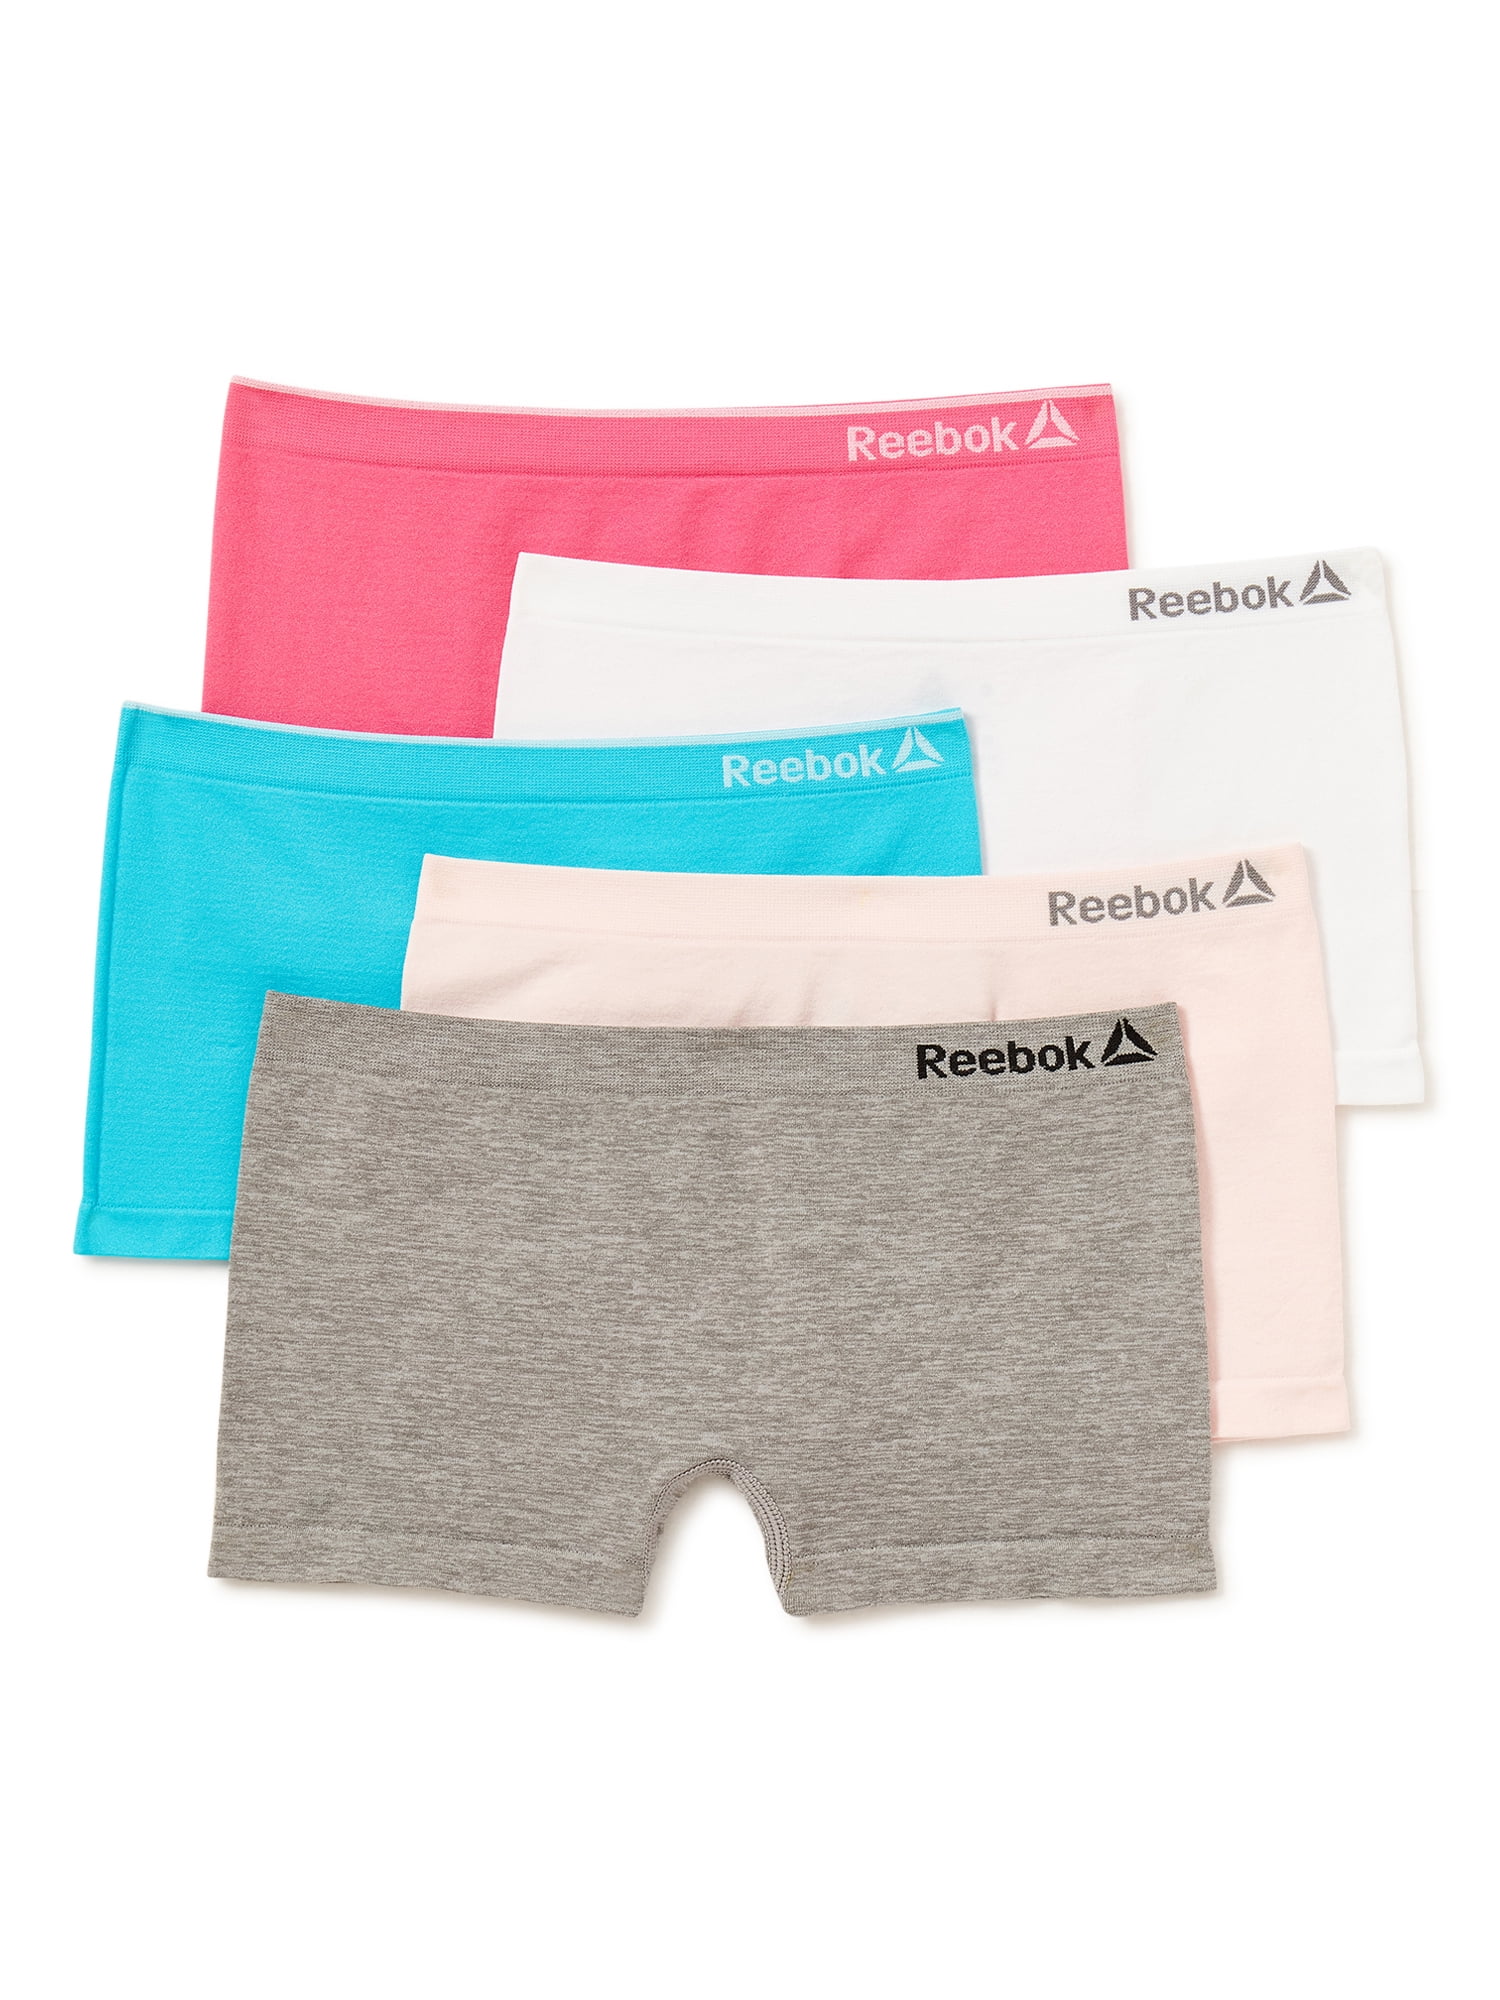 Reebok Underwear Kids Large 12-14 Multicolor 5Pack Seamless Boy